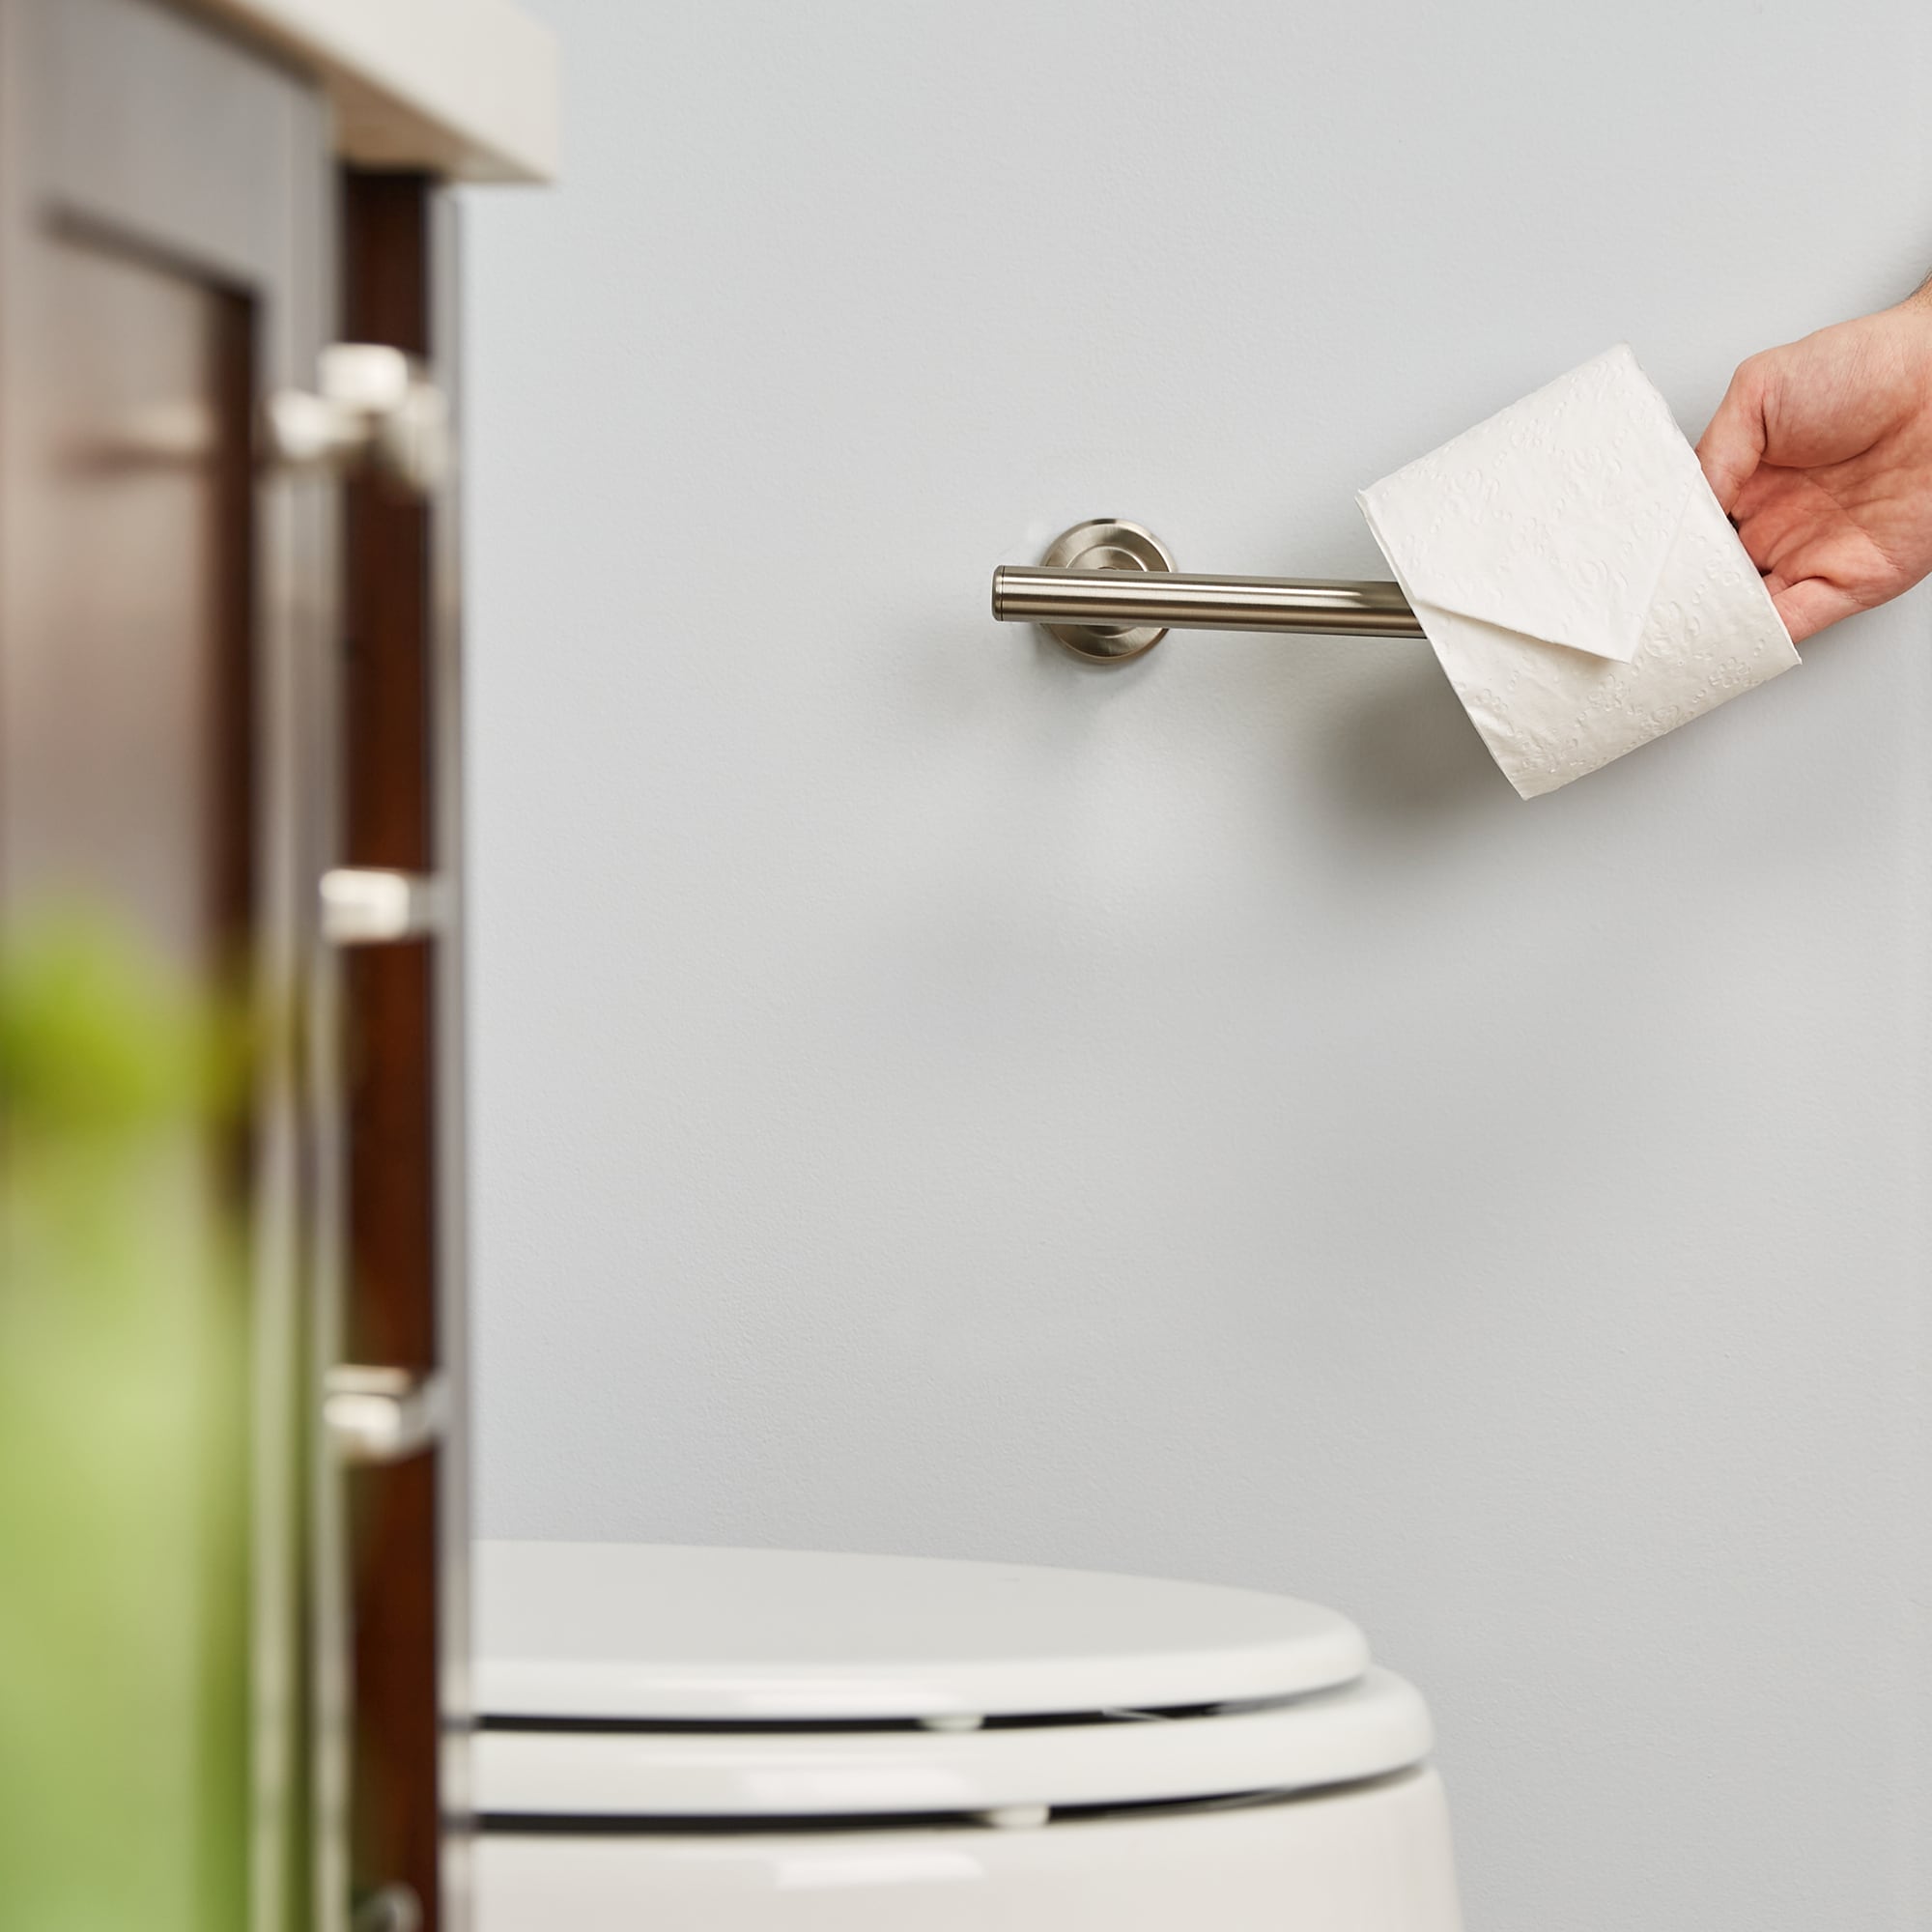 Persona Tissue Holder - Bathroom Hardware - Toilet Paper Holder